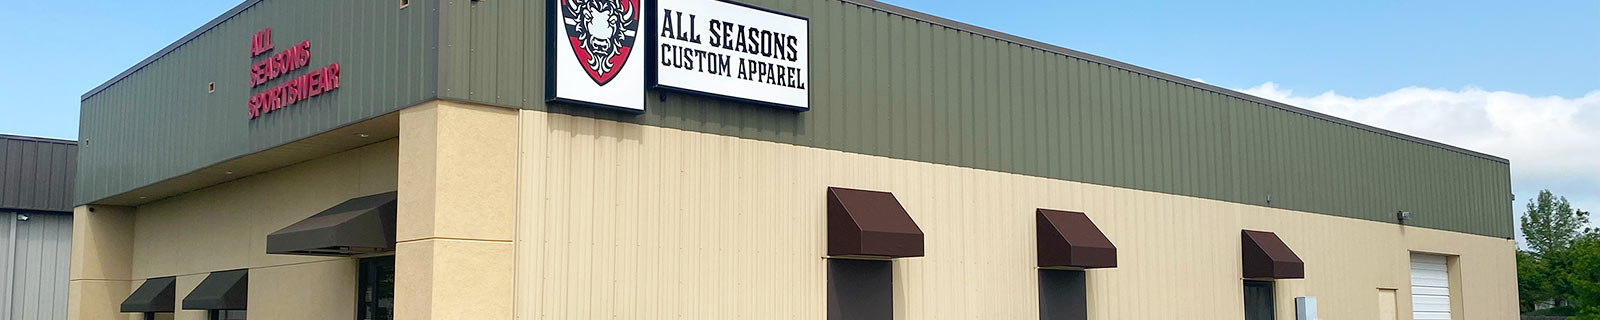 All Seasons Custom Apparel Wichita KS